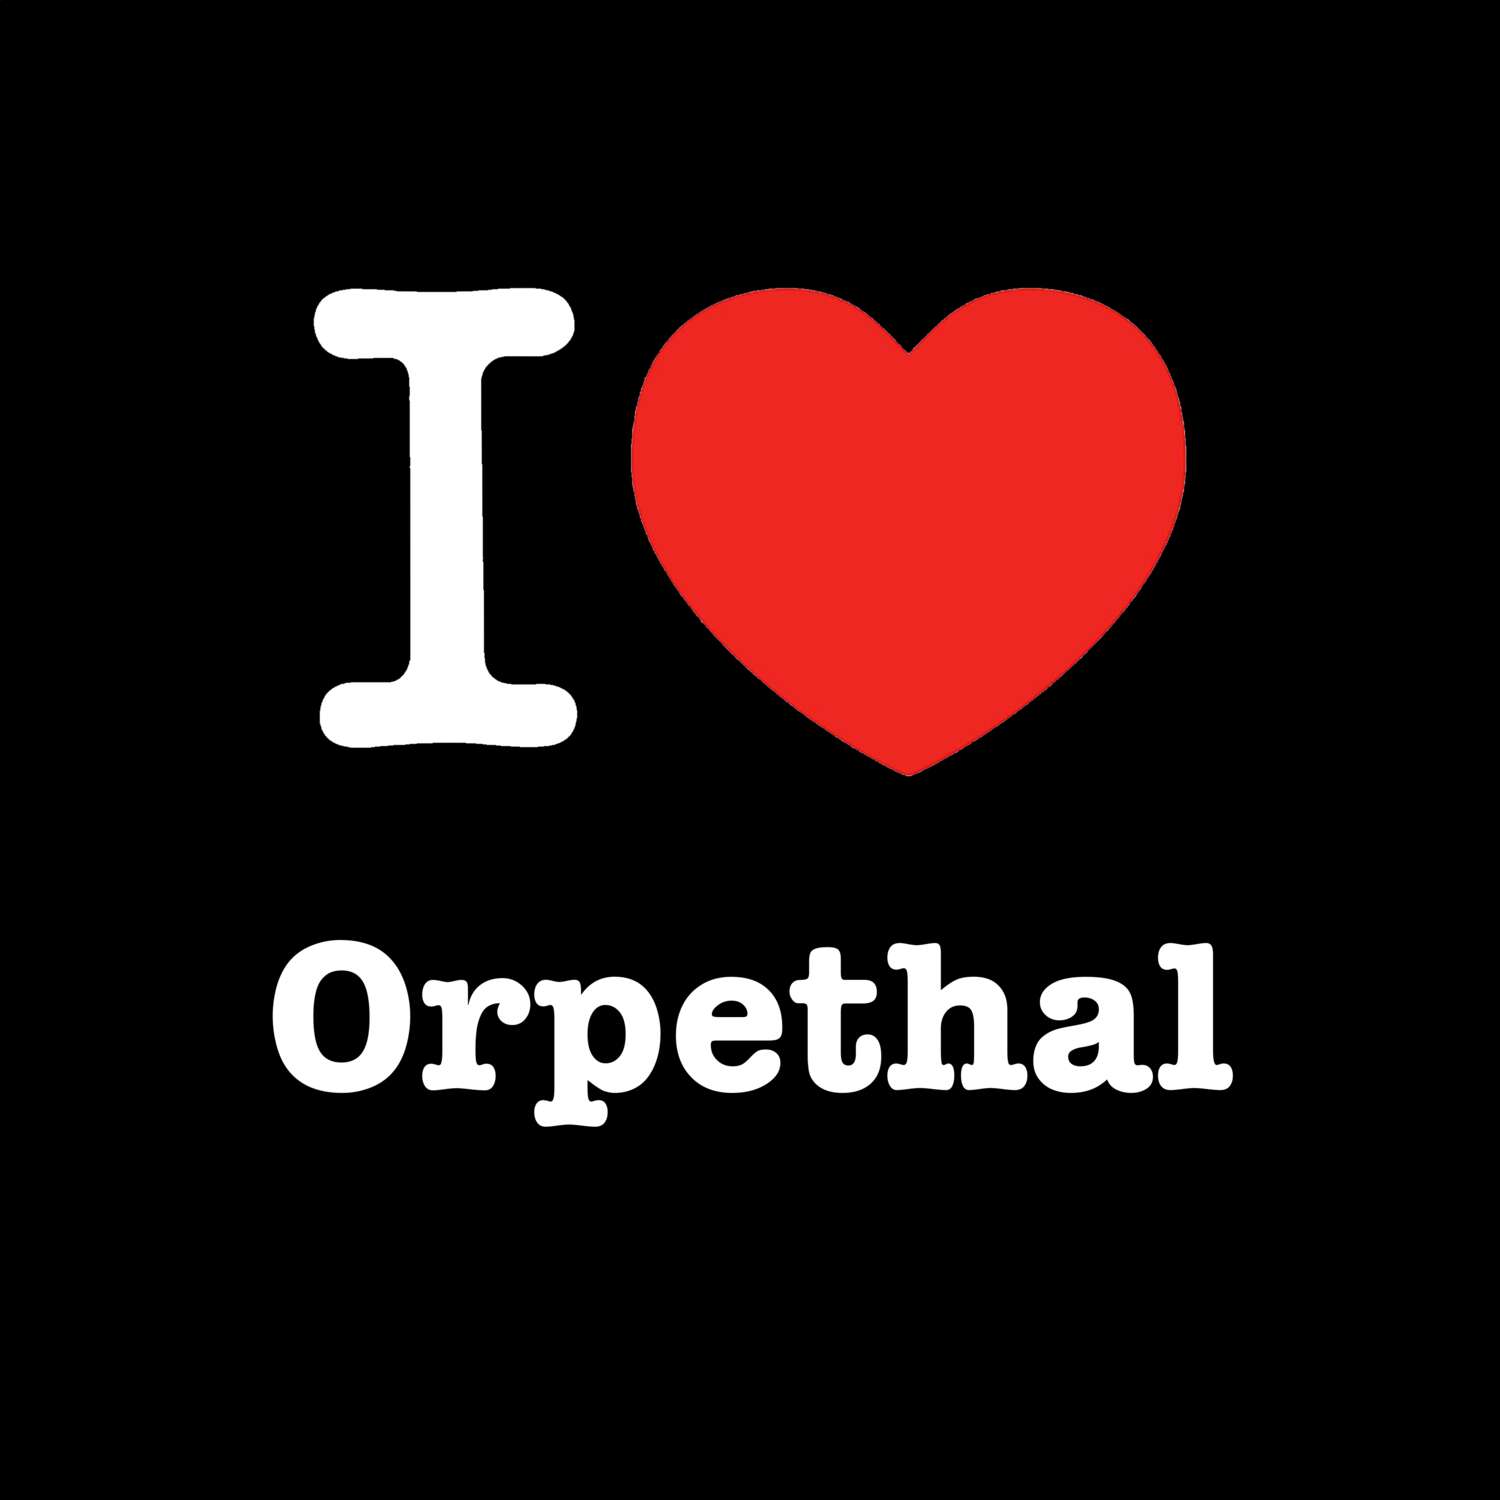 Orpethal T-Shirt »I love«